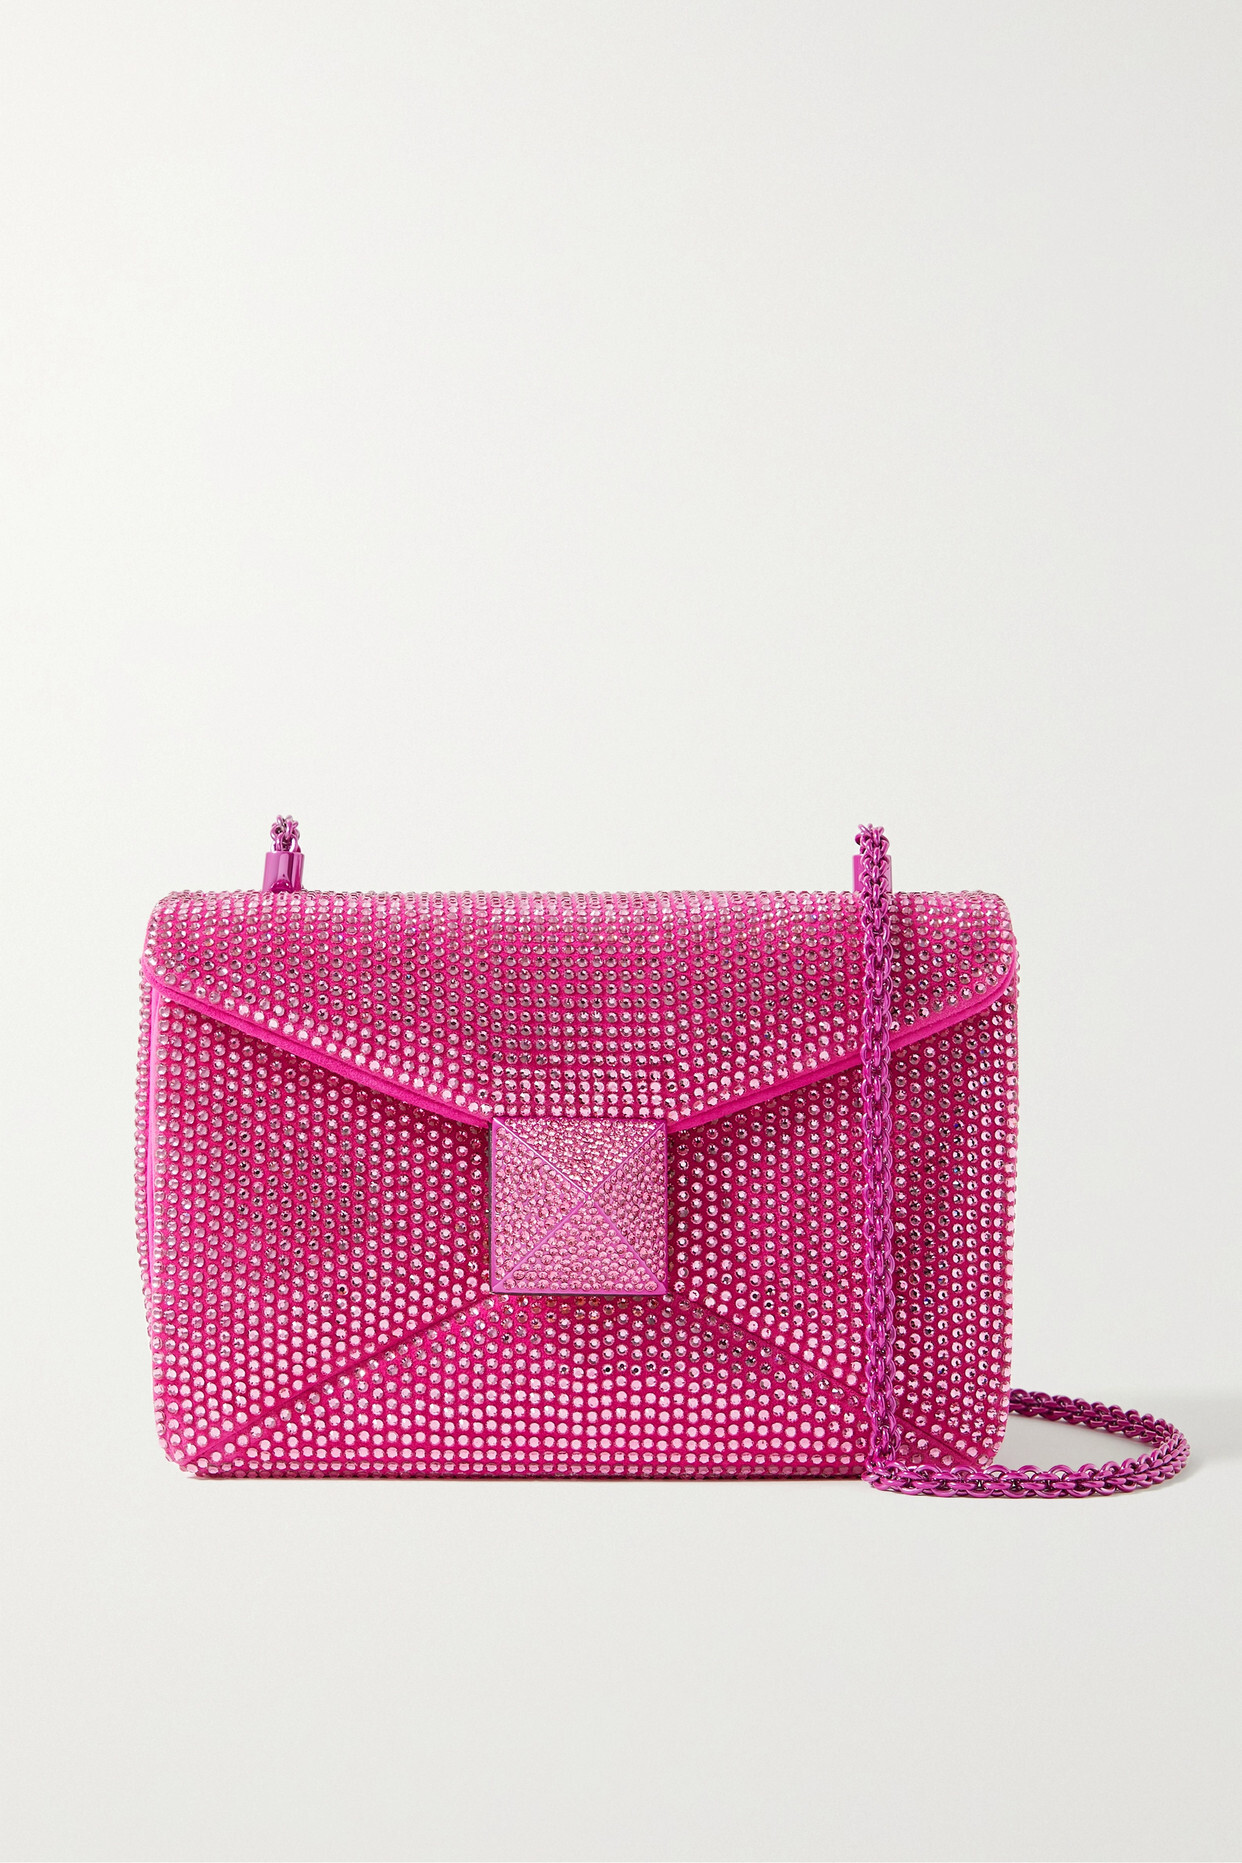 Valentino Garavani - Valentino Garavani One Stud Small Crystal-embellished Leather Shoulder Bag - Pink